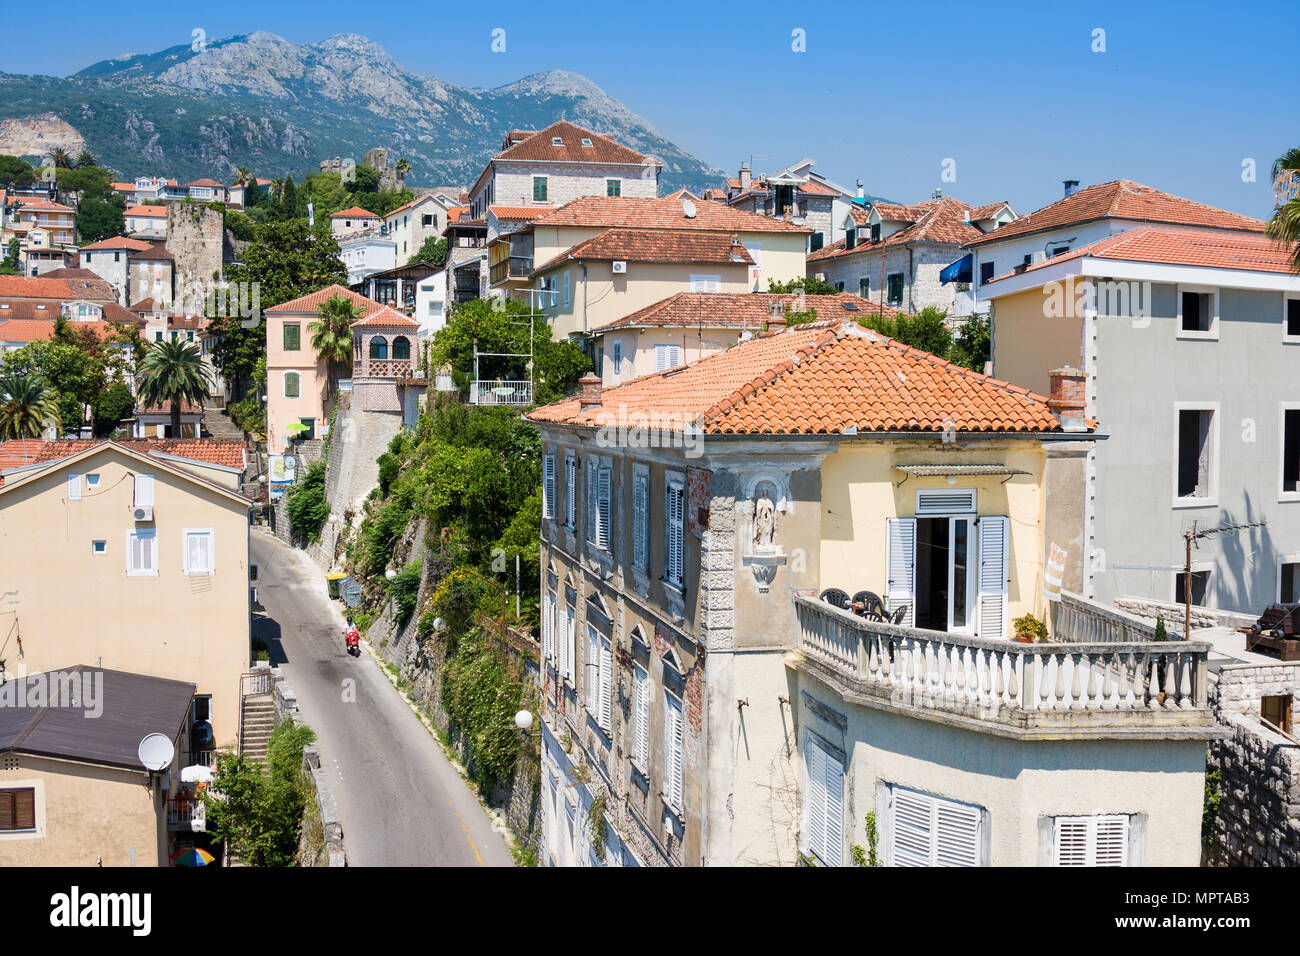 Herceg Novi, Montenegro - July 8, 2015: View on street in old town, Herceg Novi, Kotor Bay, Montenegro Stock Photo